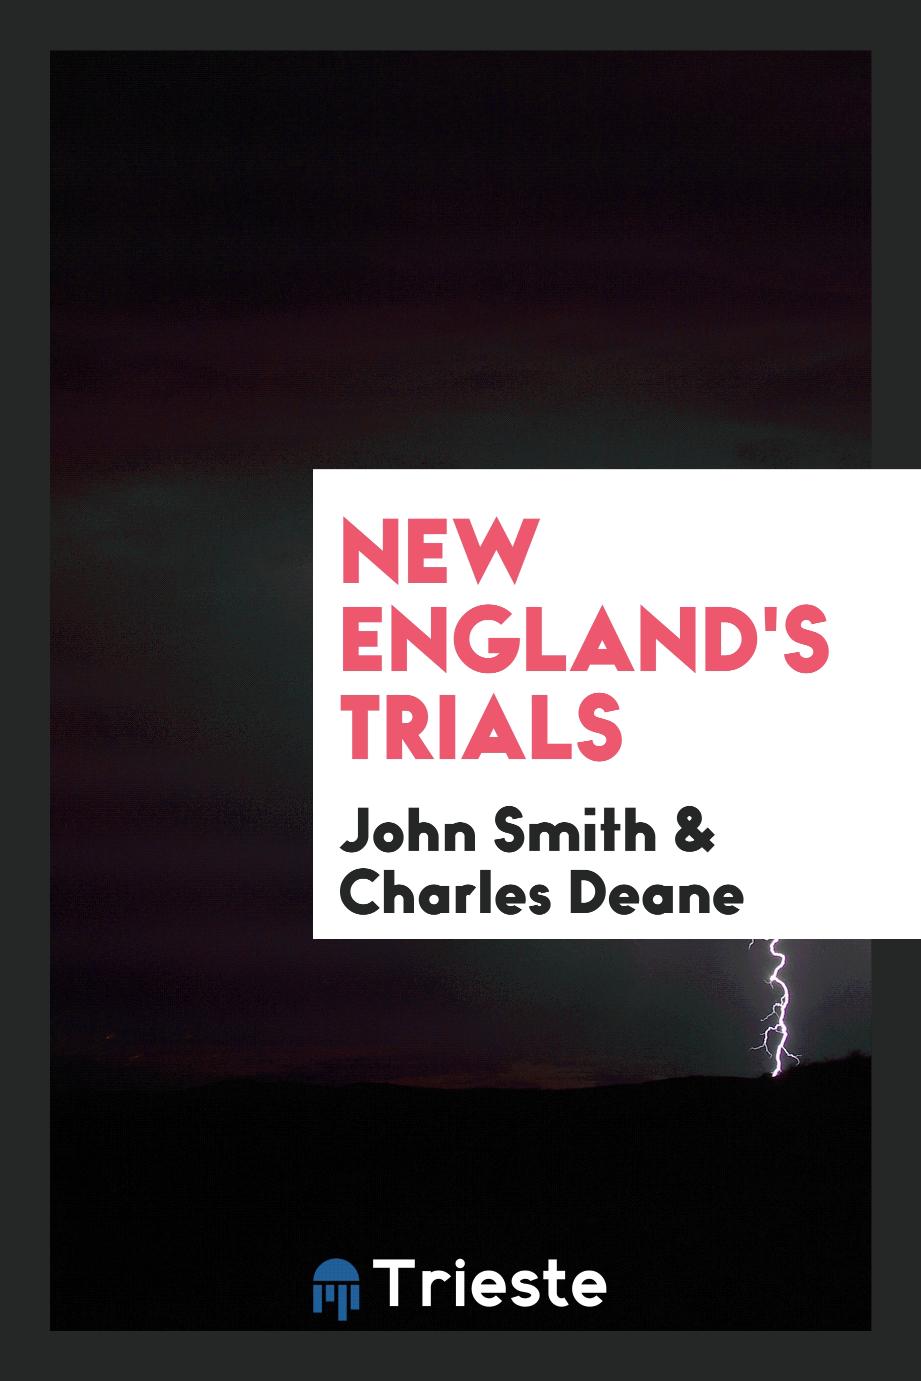 New England's trials